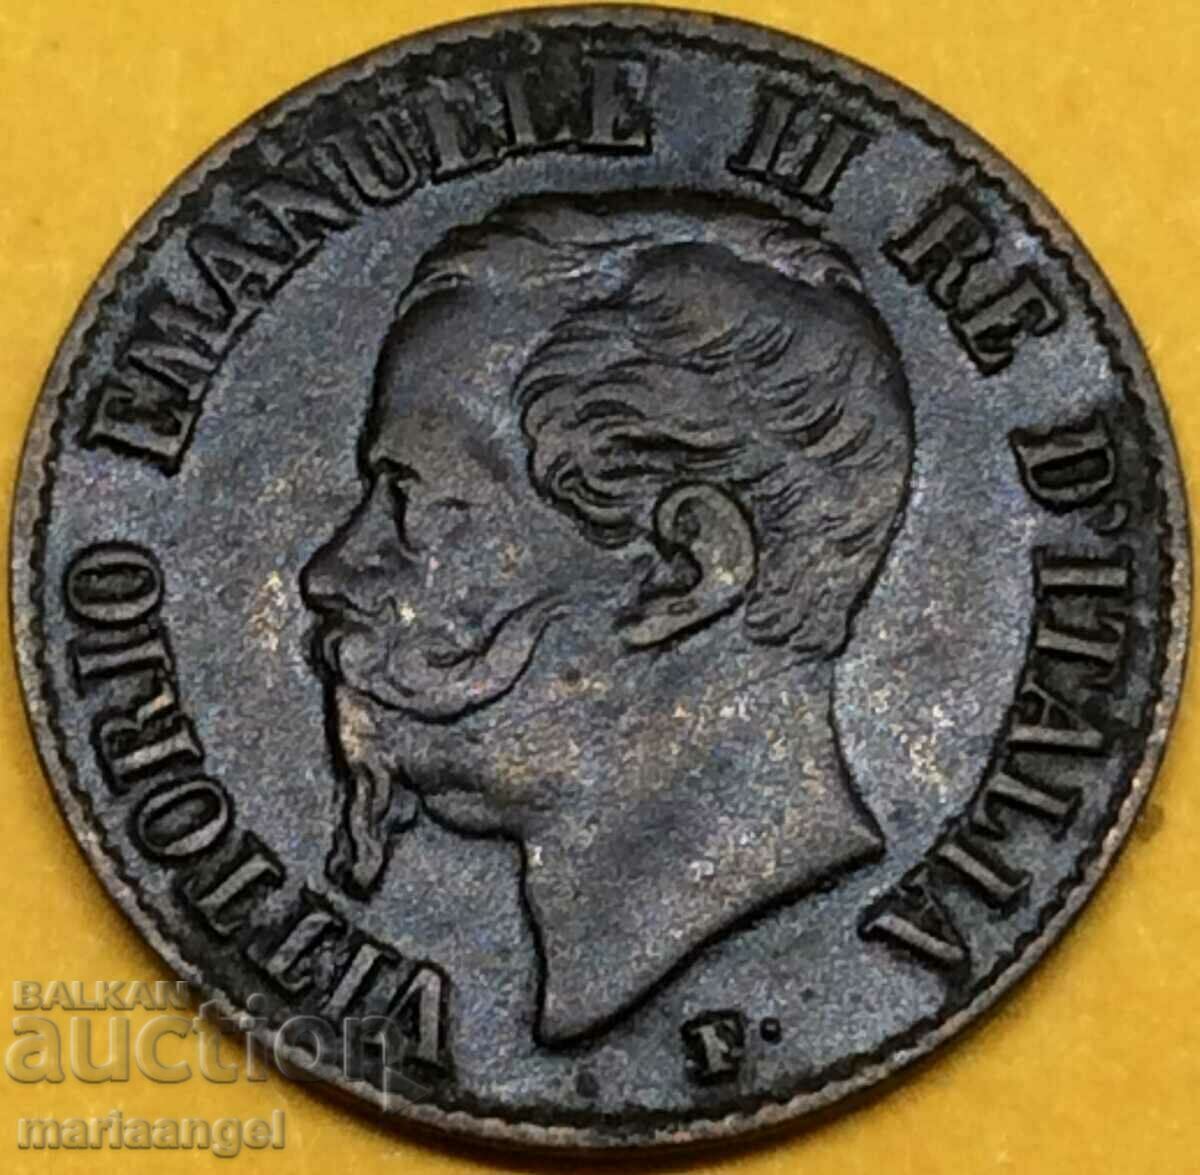 1 centesimo 1861 Italy Milan Victor Emmanuel - not common